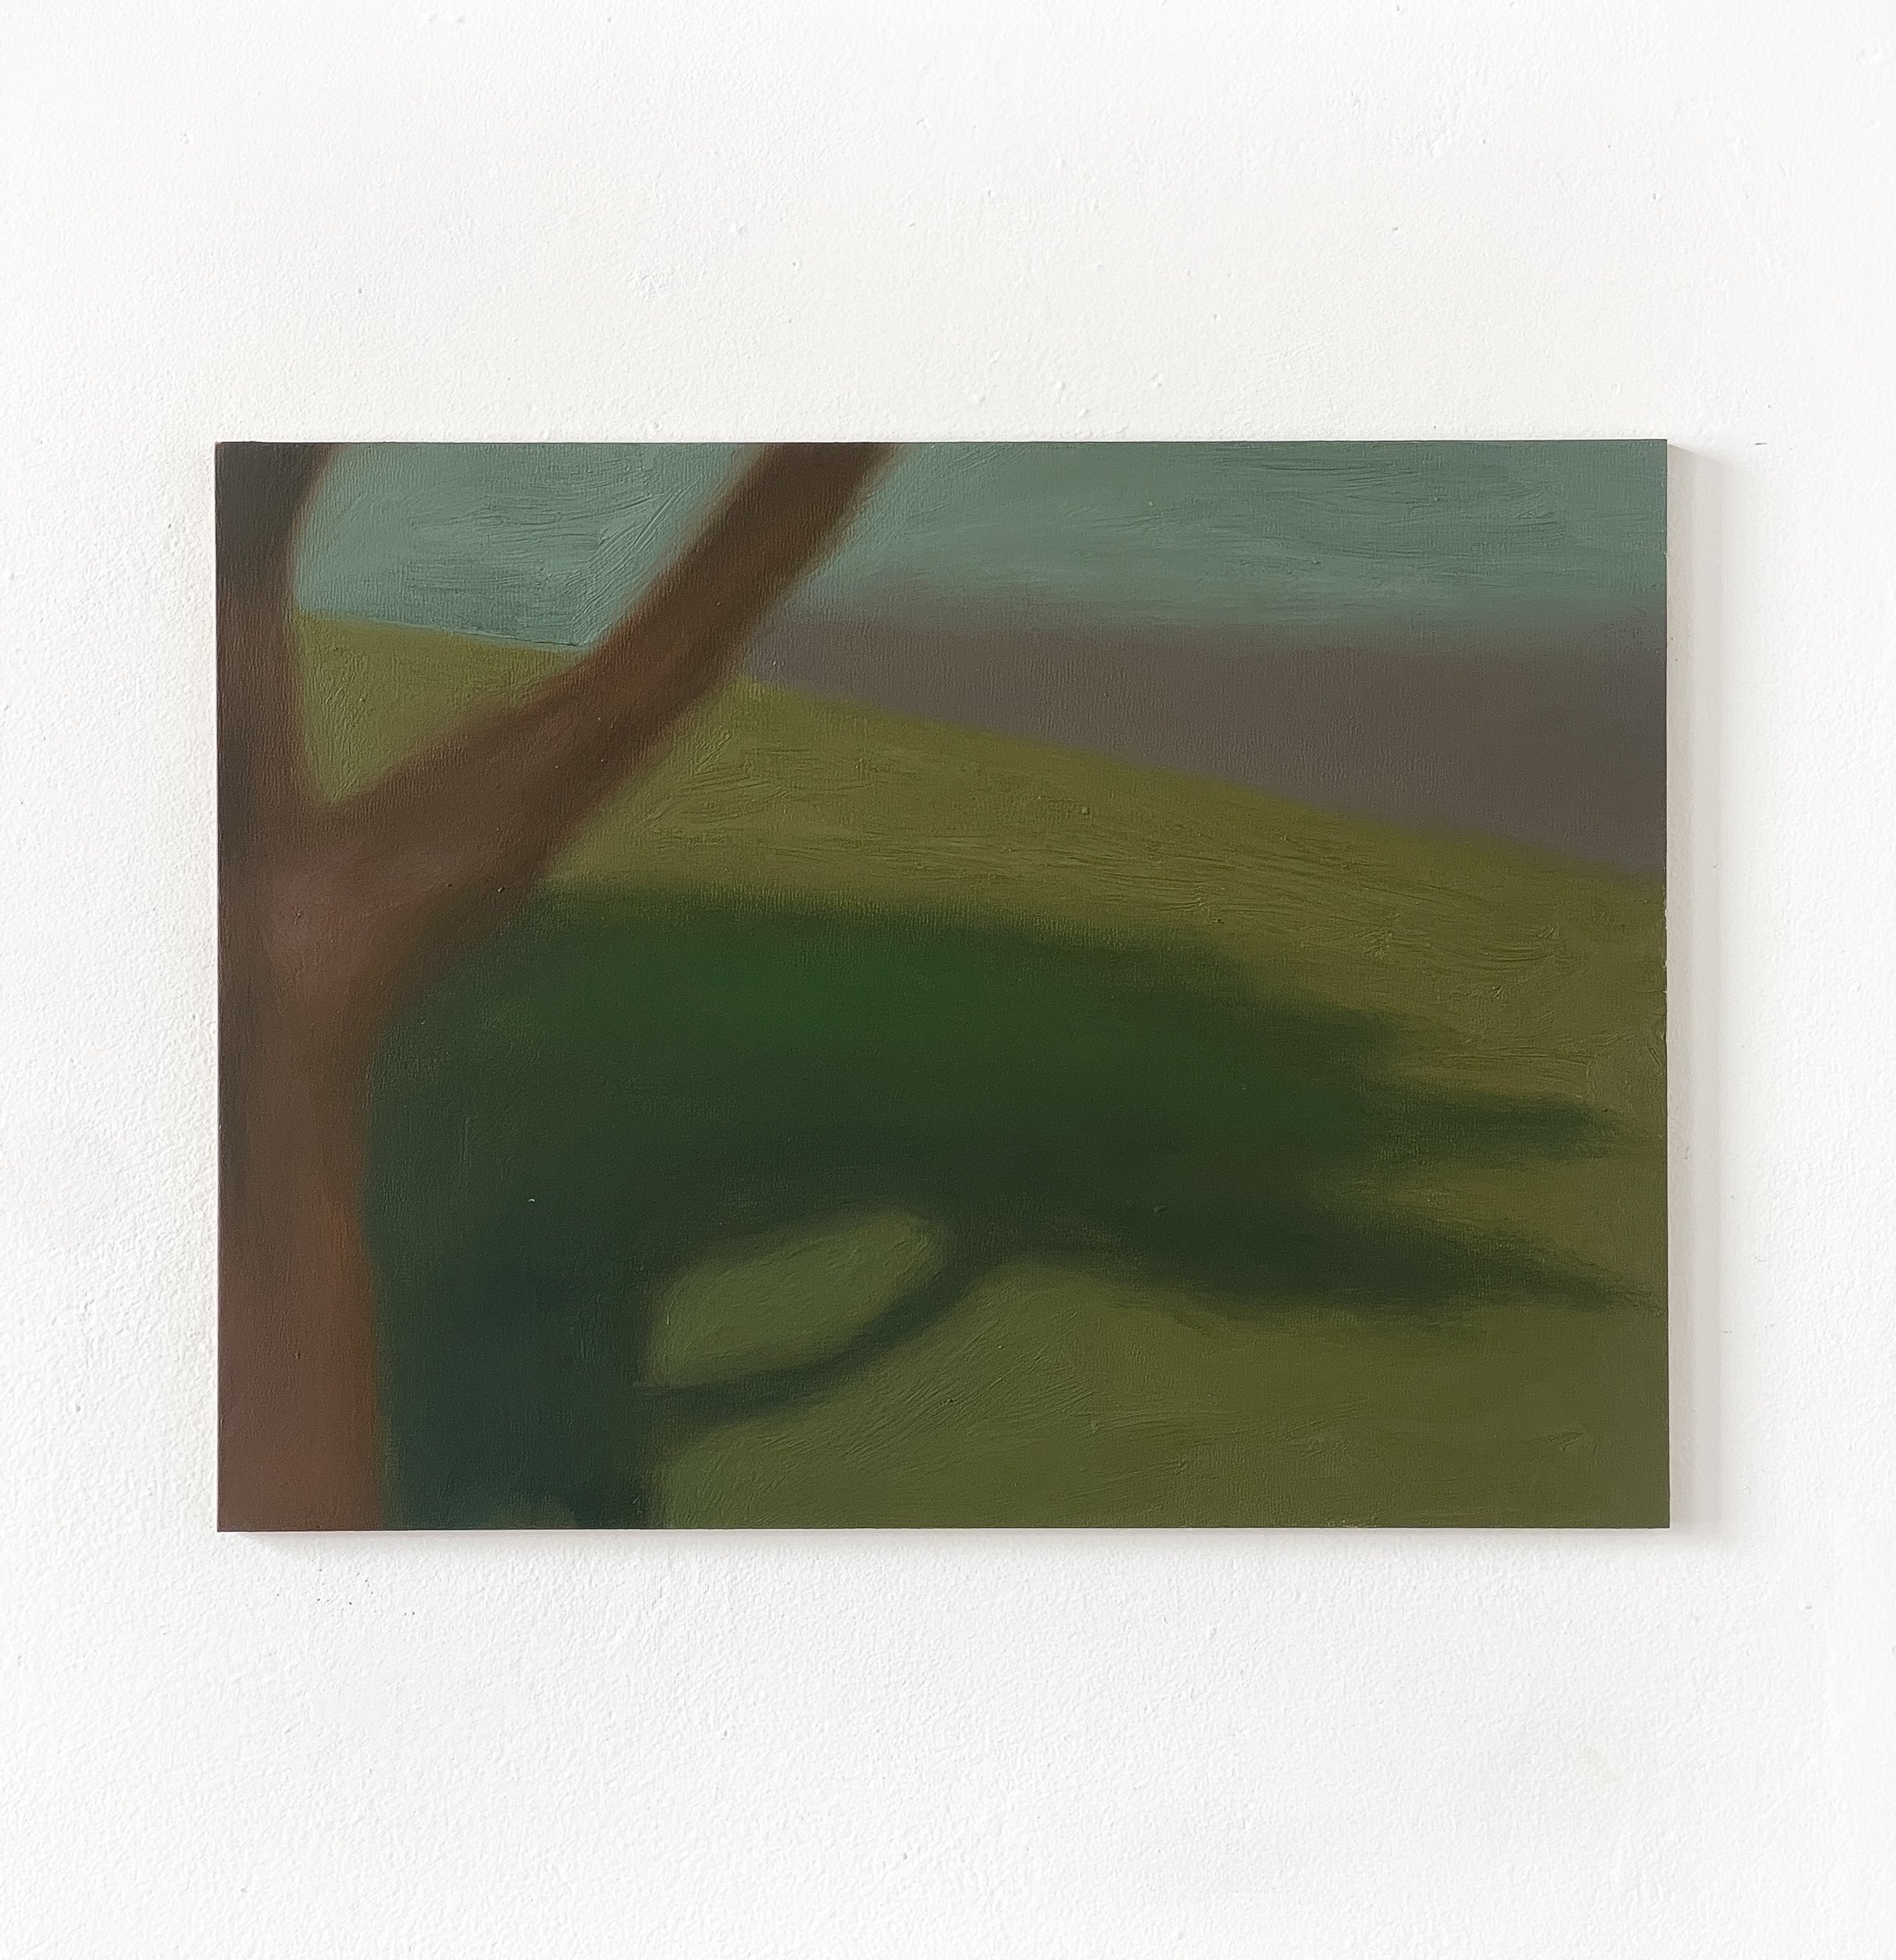  figure ground, temp swell, tree shade painting  12 x 16 